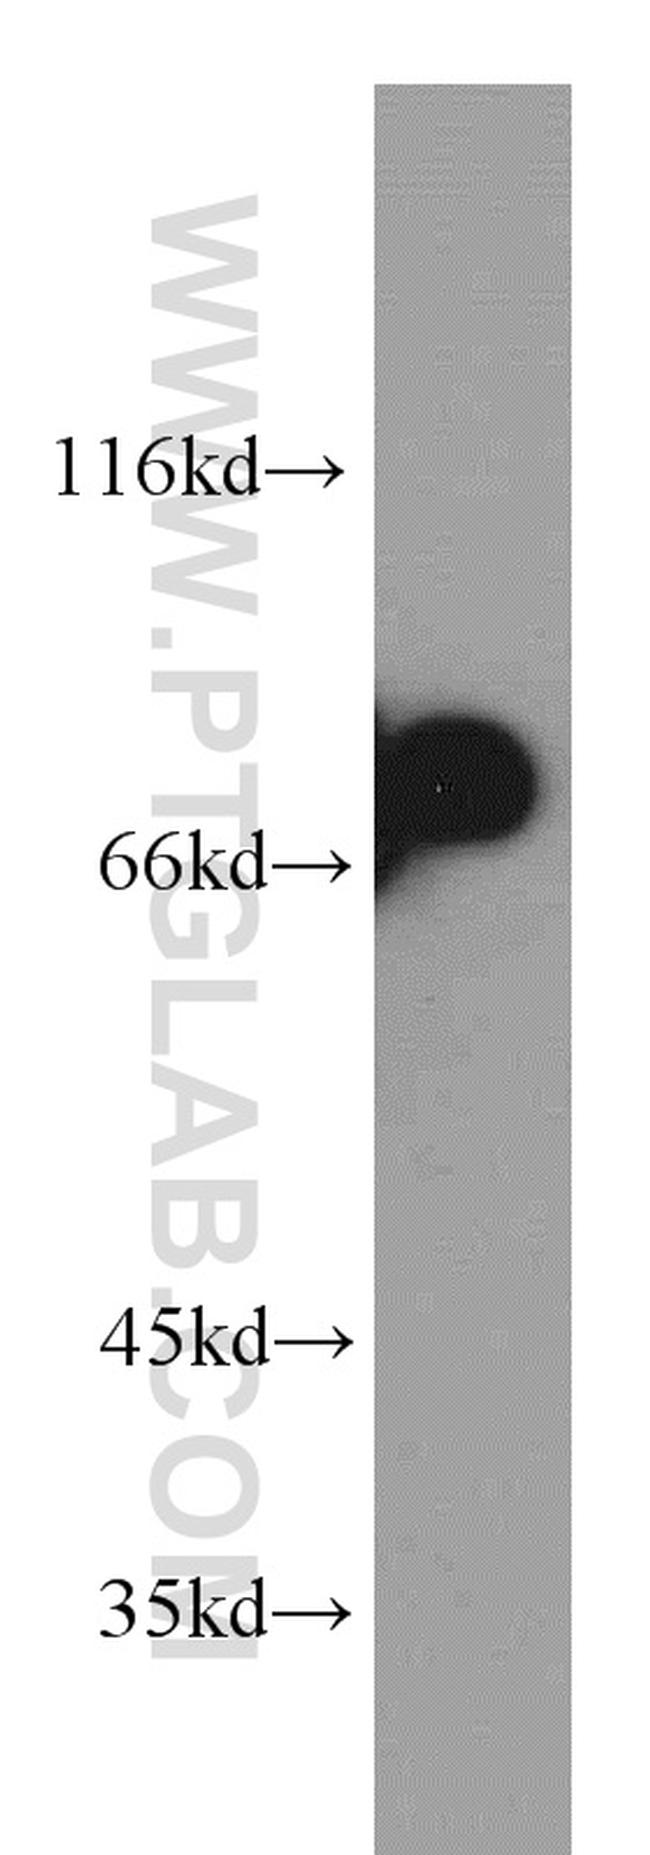 Arp5/ACTR5 Antibody in Western Blot (WB)